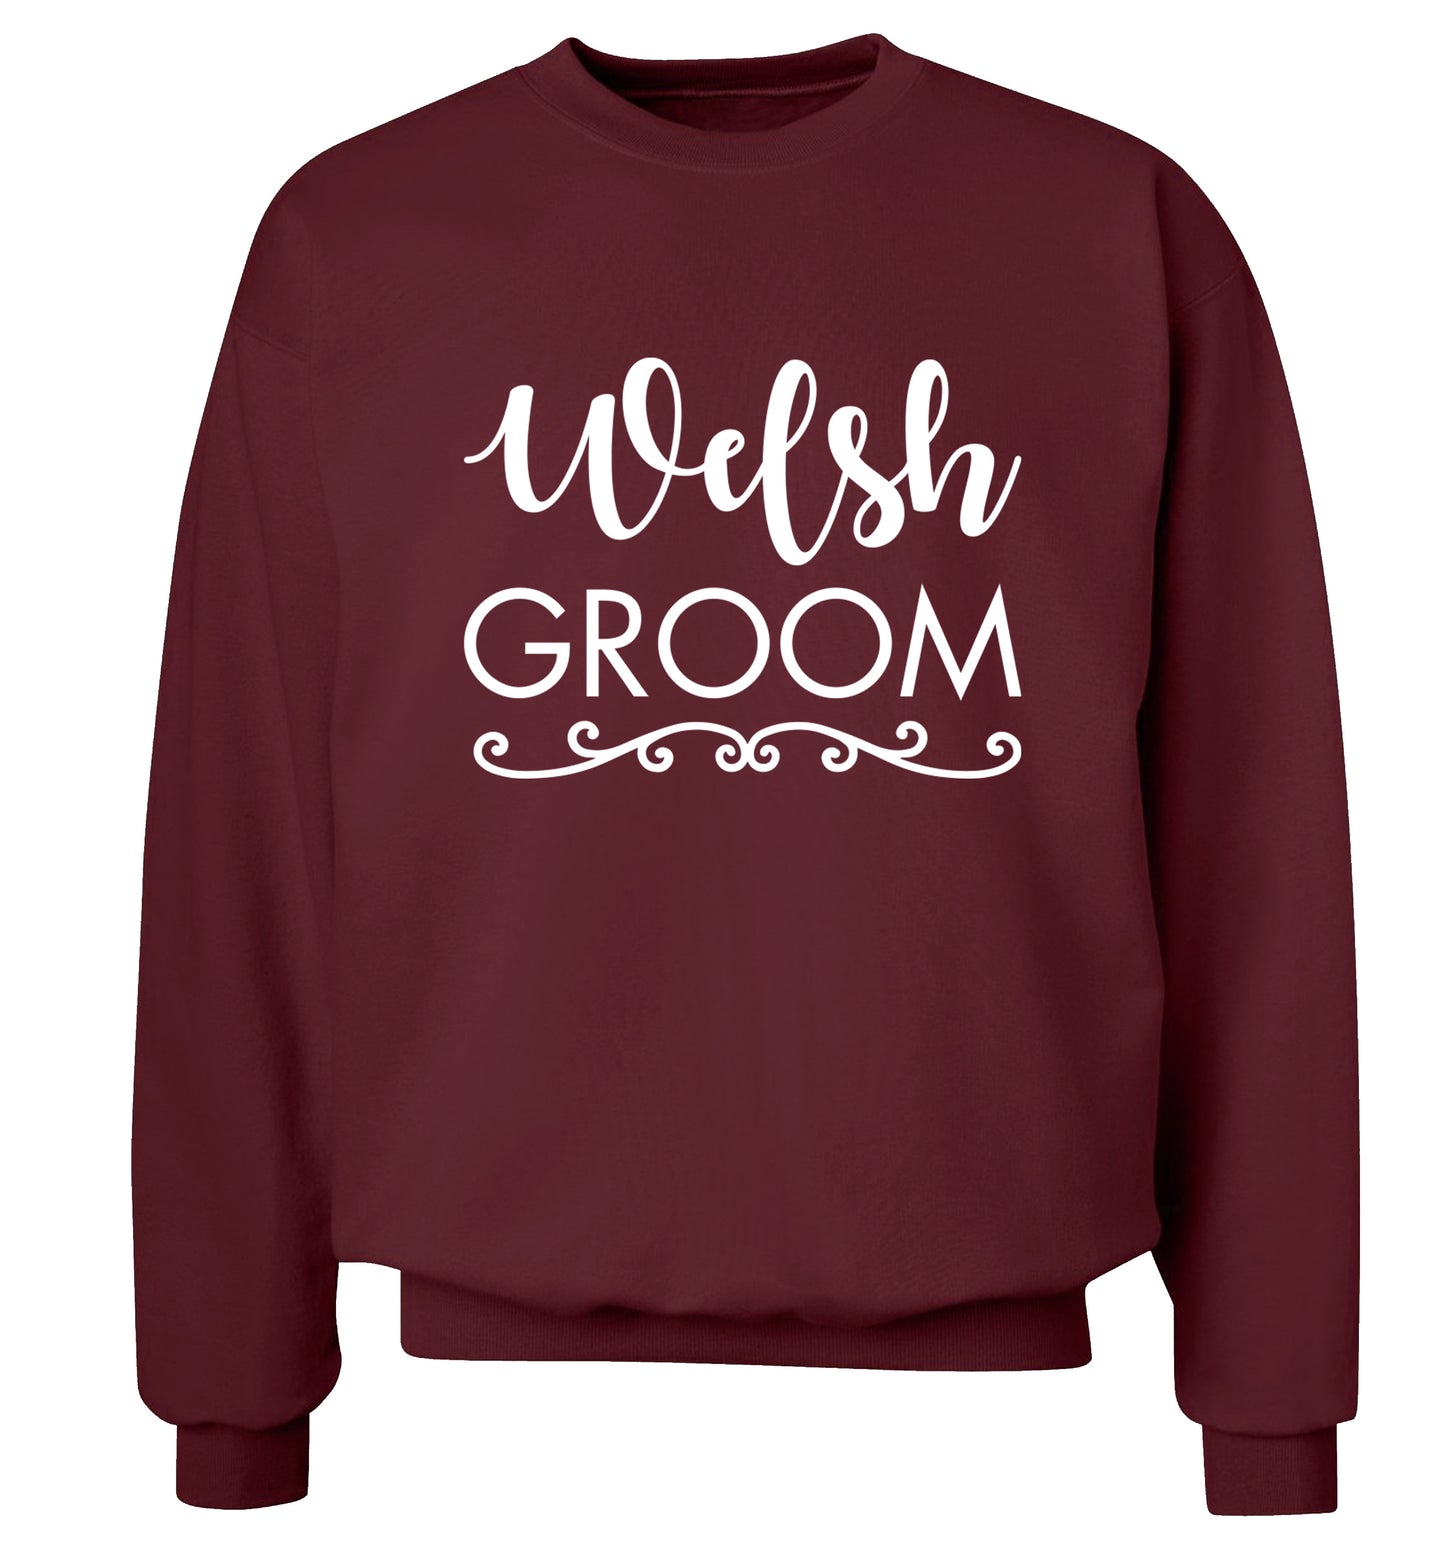 Welsh groom Adult's unisex maroon Sweater 2XL